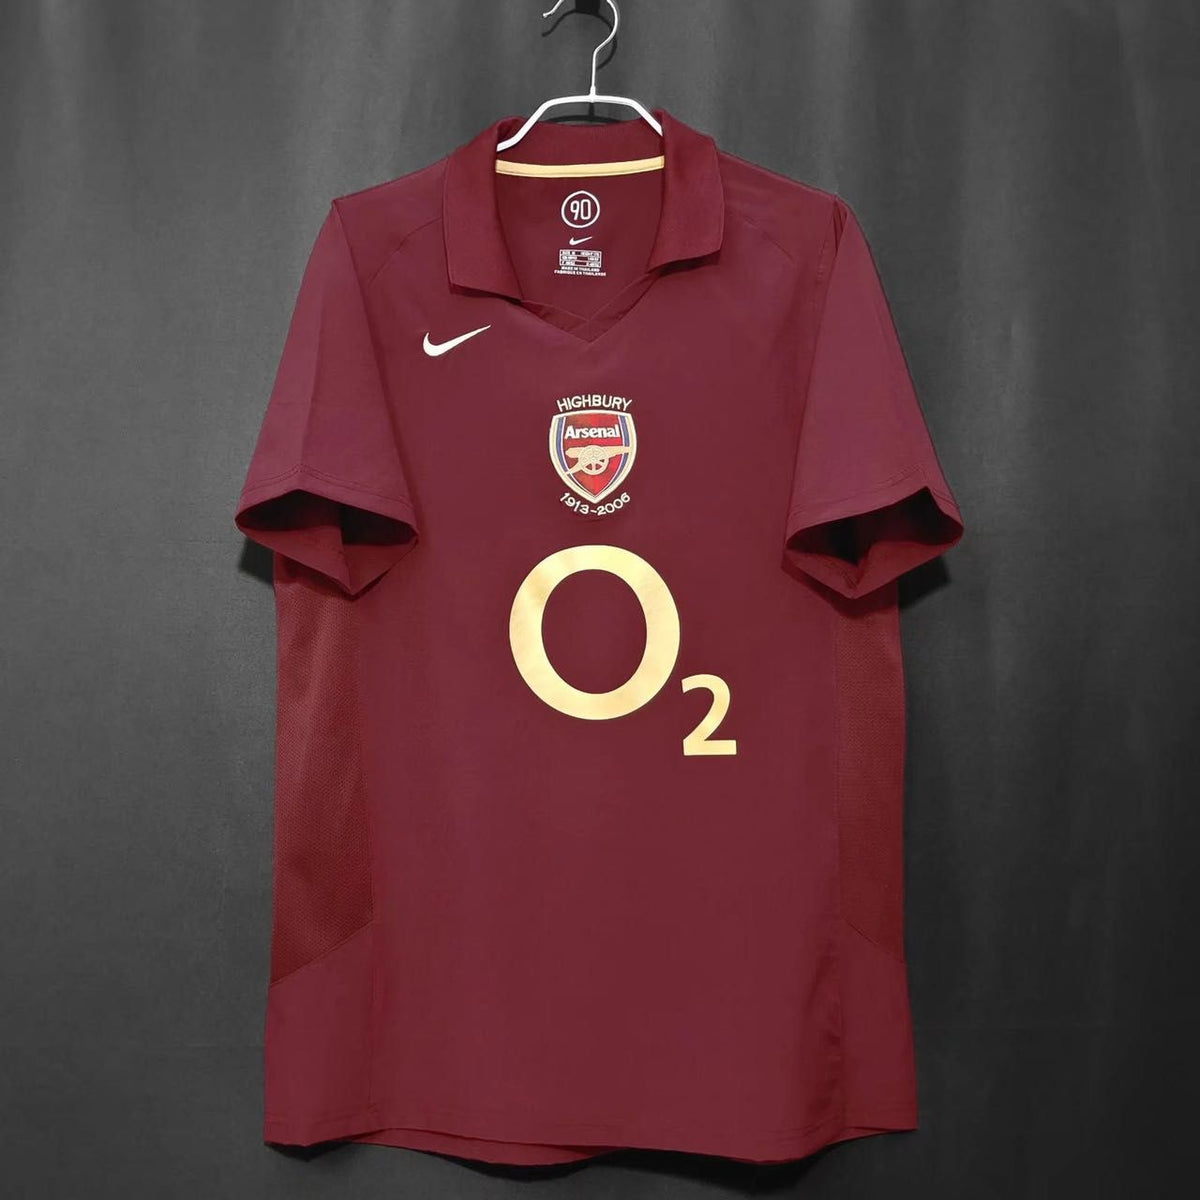 Arsenal 2005-06 Home O2 Retro Jersey